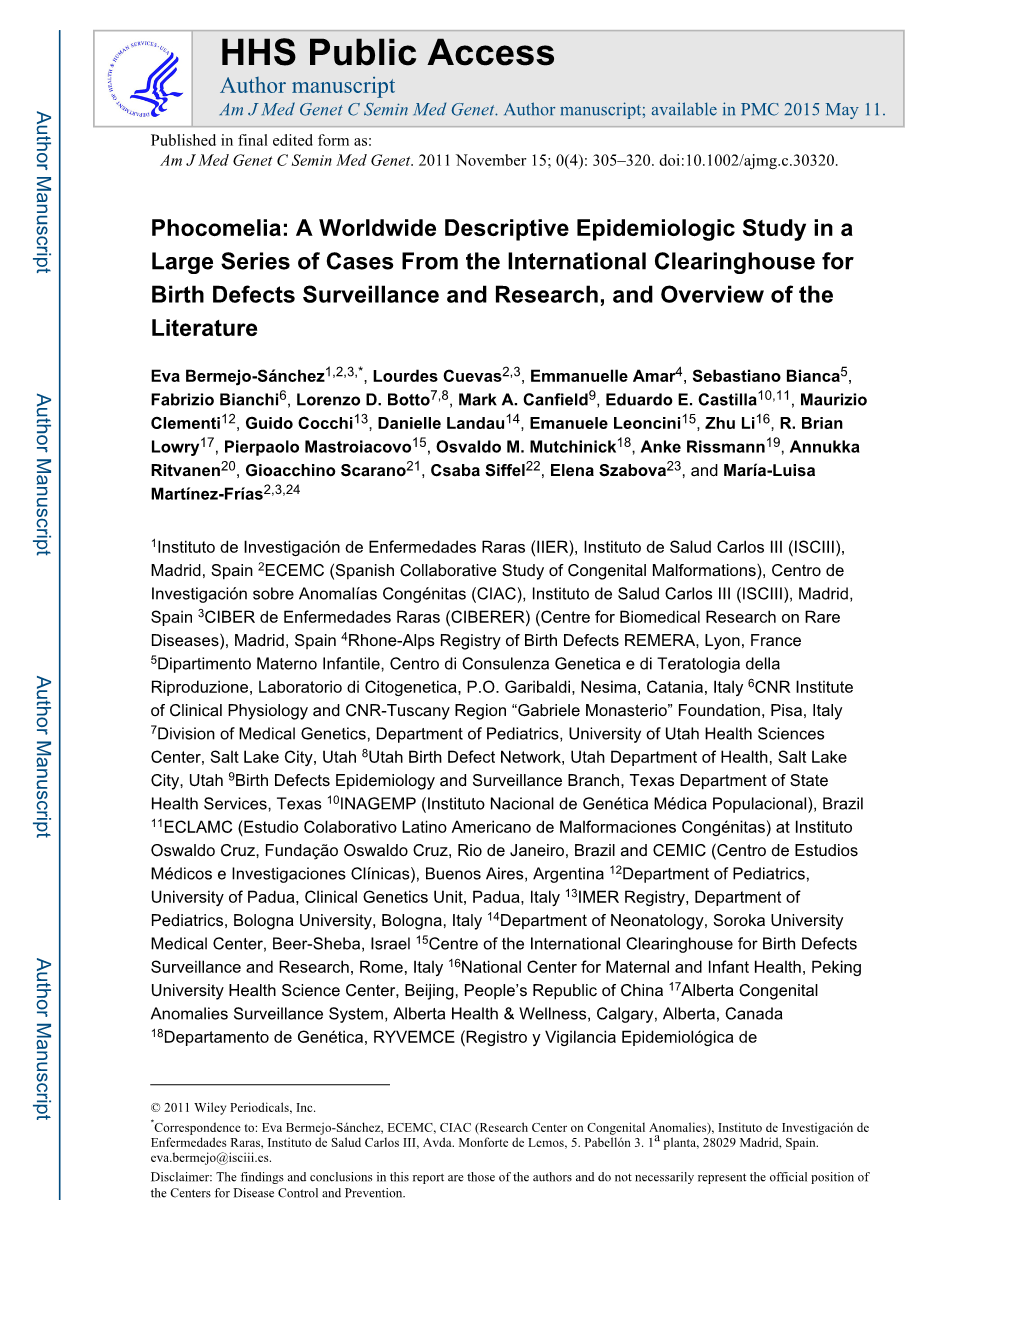 Phocomelia: a Worldwide Descriptive Epidemiologic Study in a Large